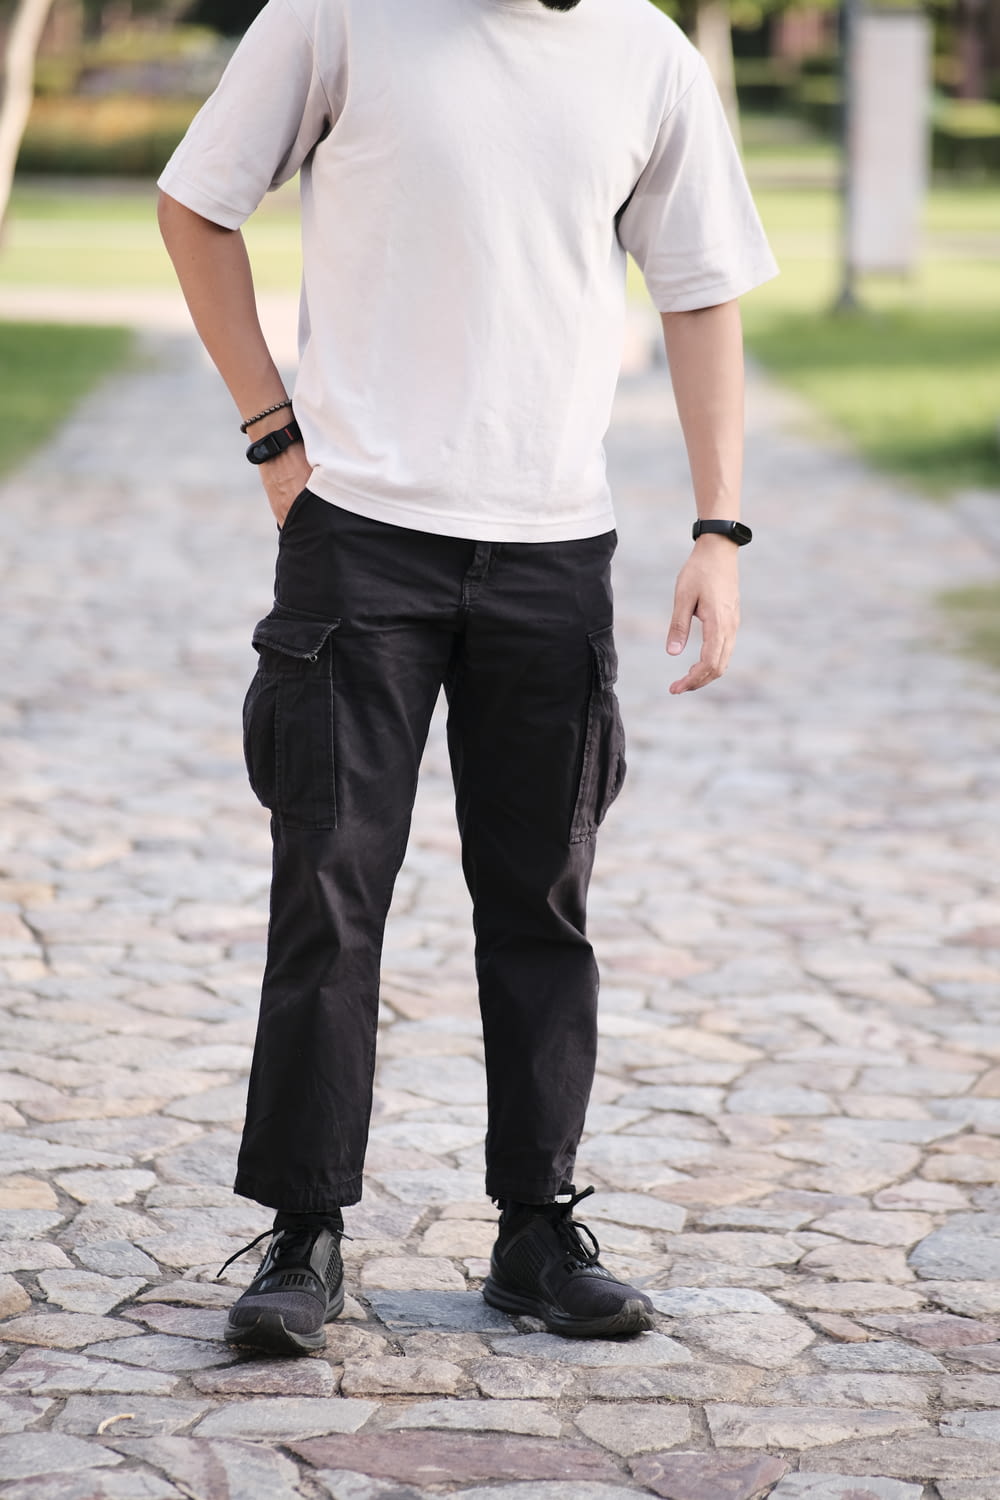 a man wearing a white shirt and black pants